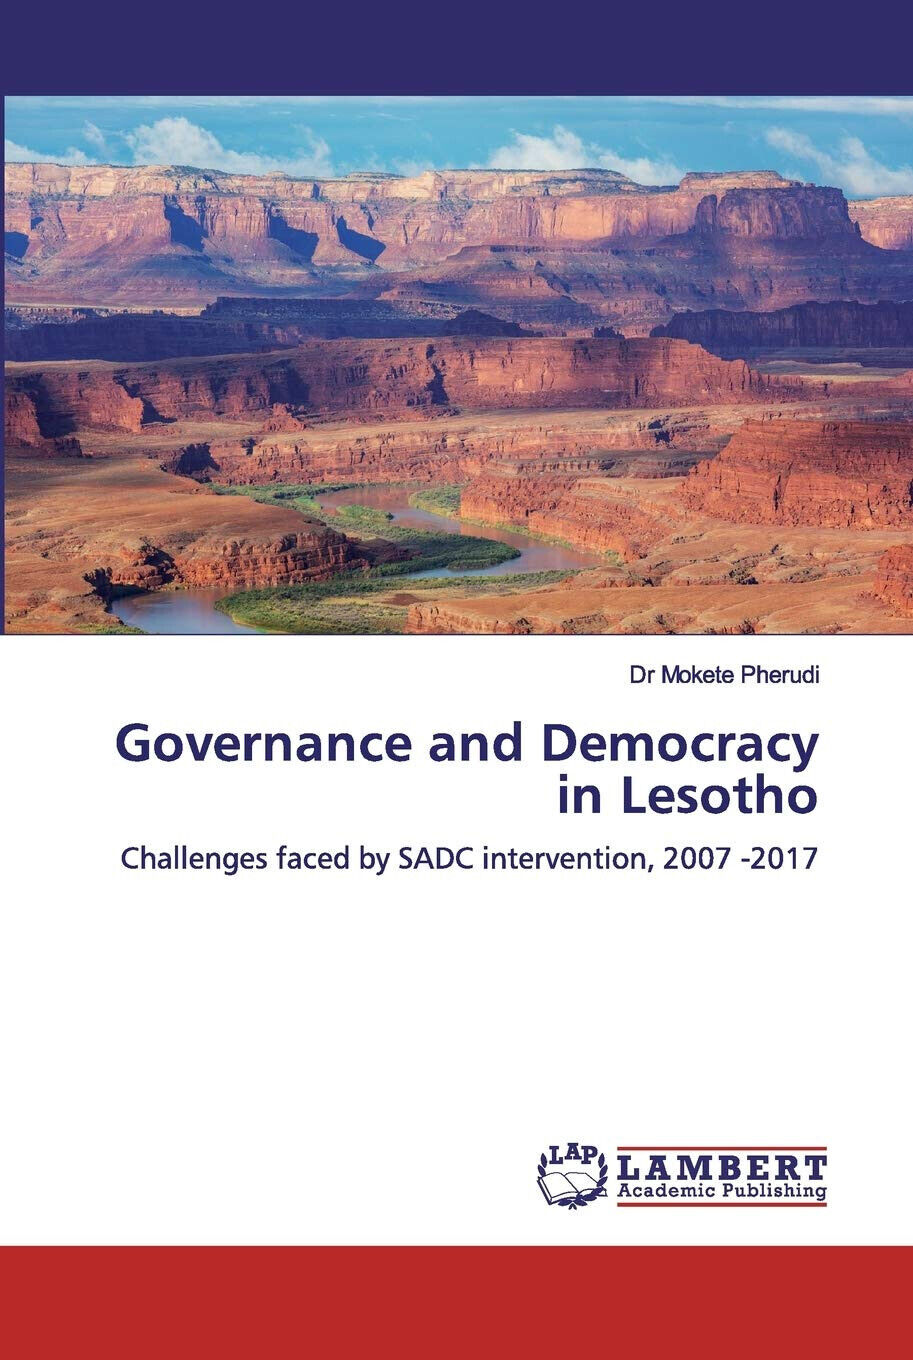 Governance And Democracy In Lesotho - Dr Mokete Pherudi - Lambert, 2019